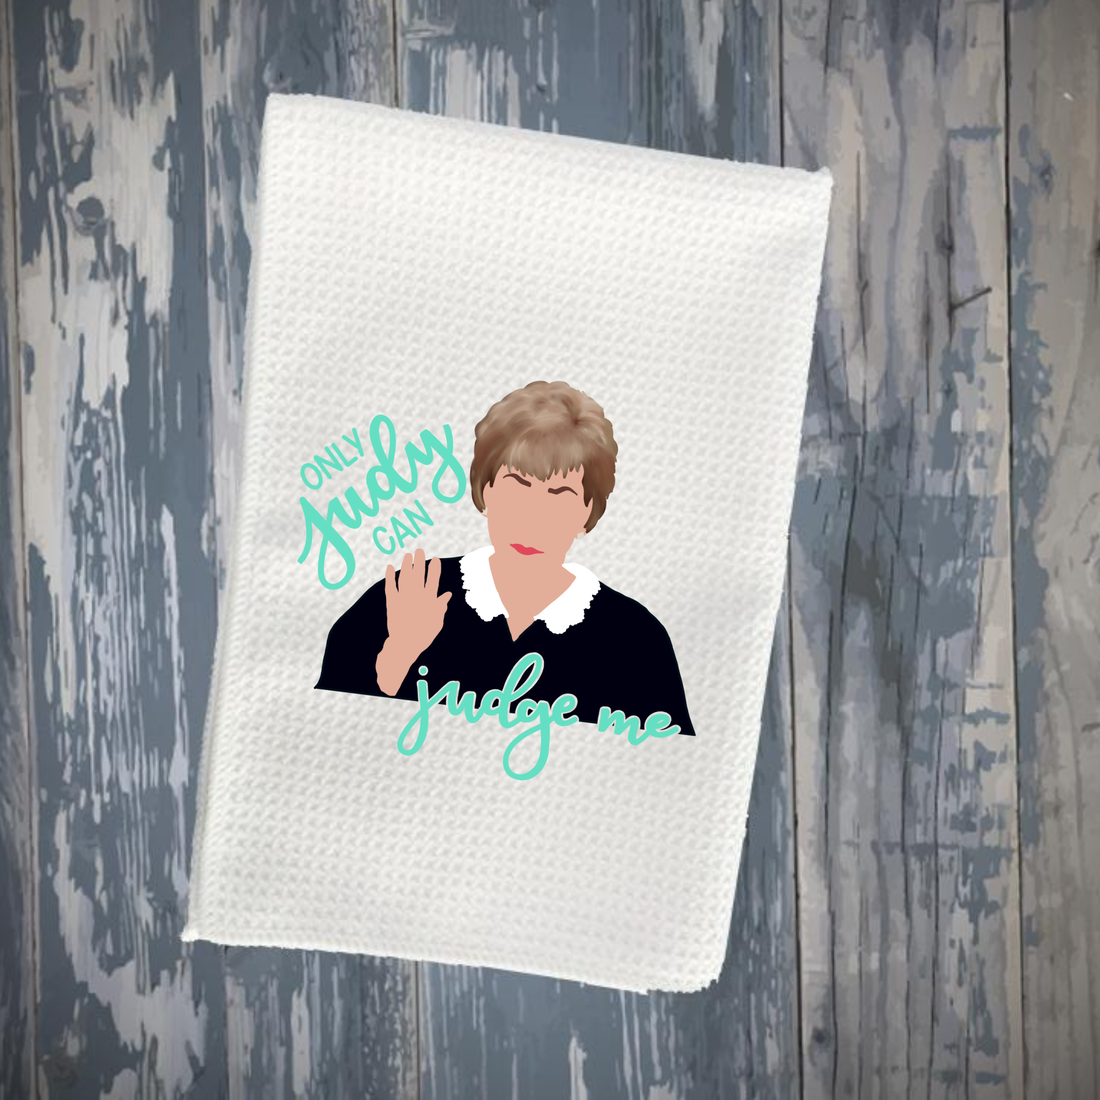 Only Judge Judy Kitchen Towel